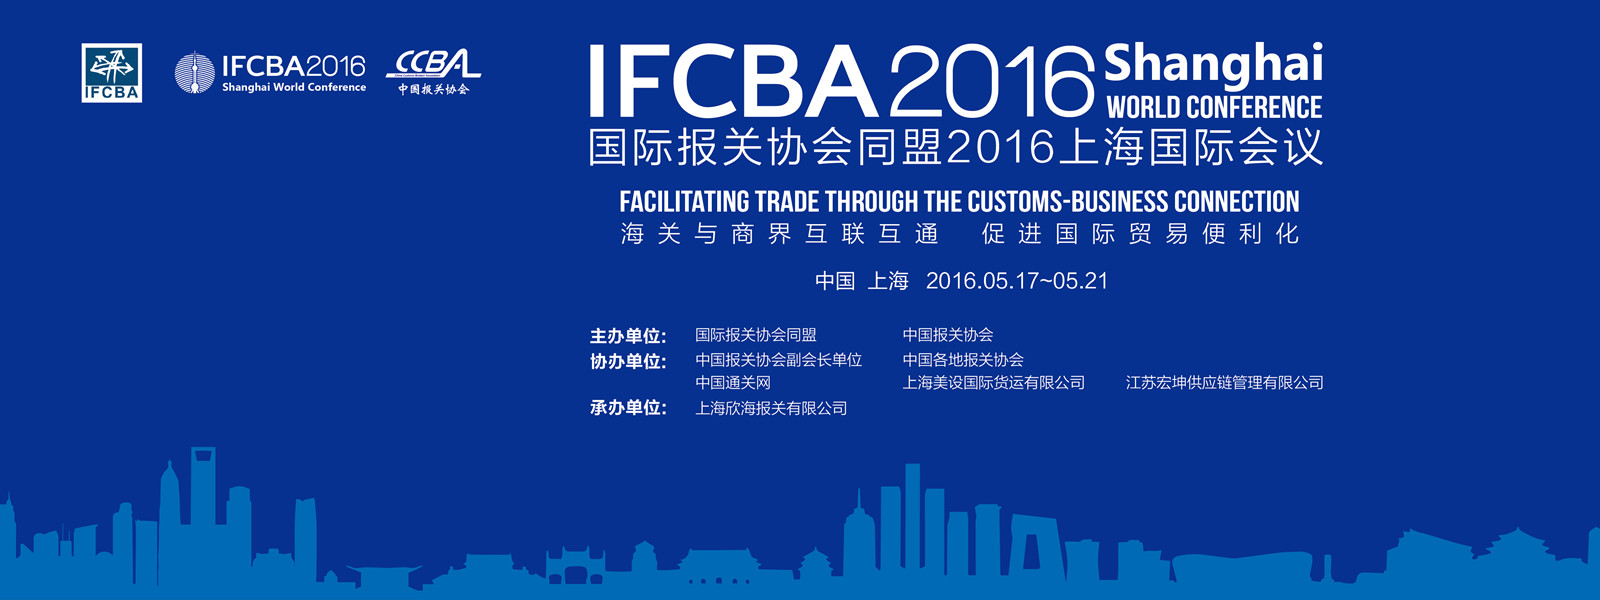 2016IFCBA花絮29—IFCBA年会上首次举办的企业“一对一”对接会顺利举行